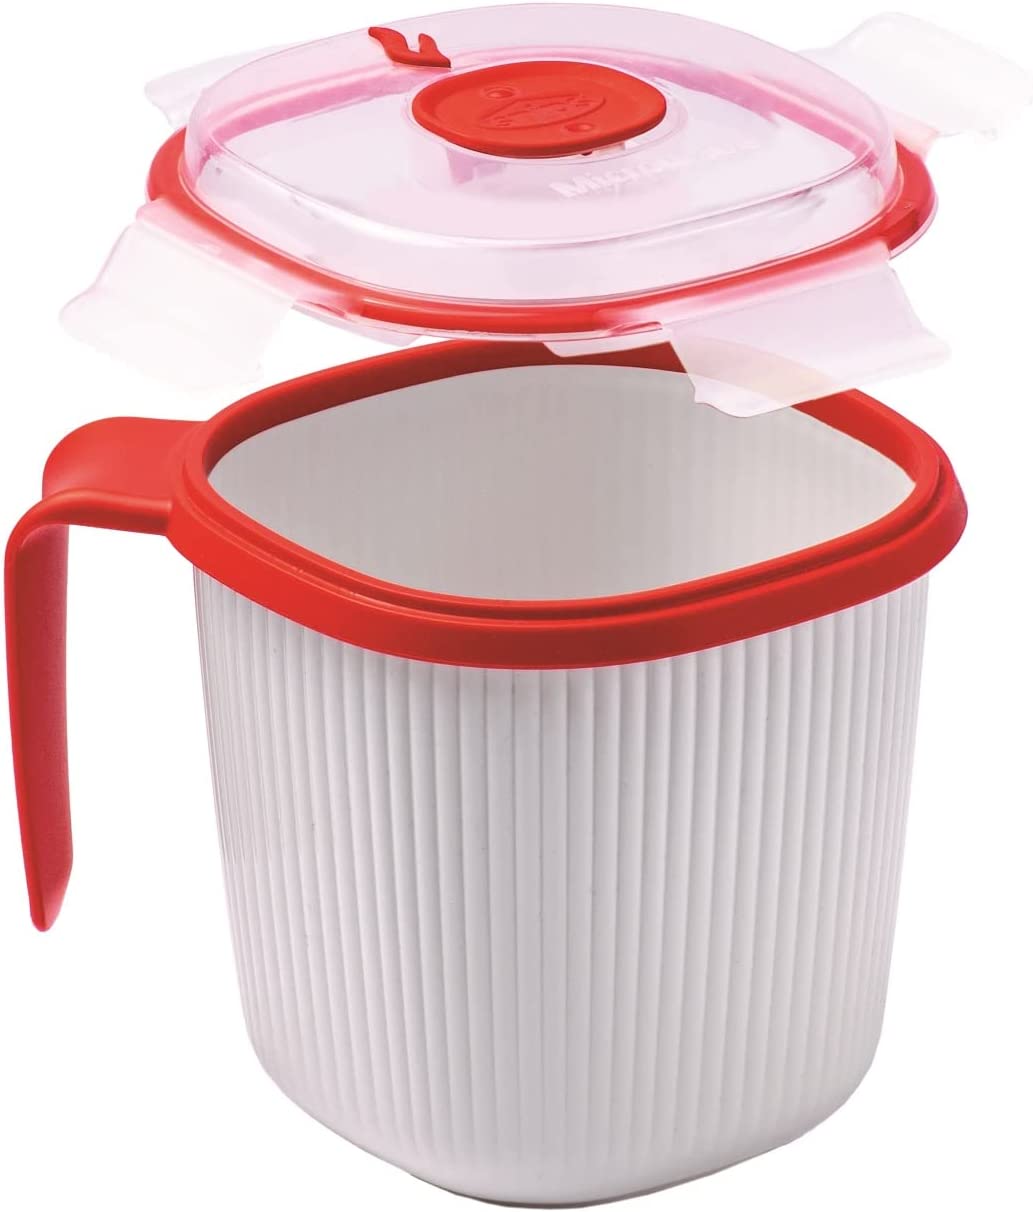 Microwave Mug - Red